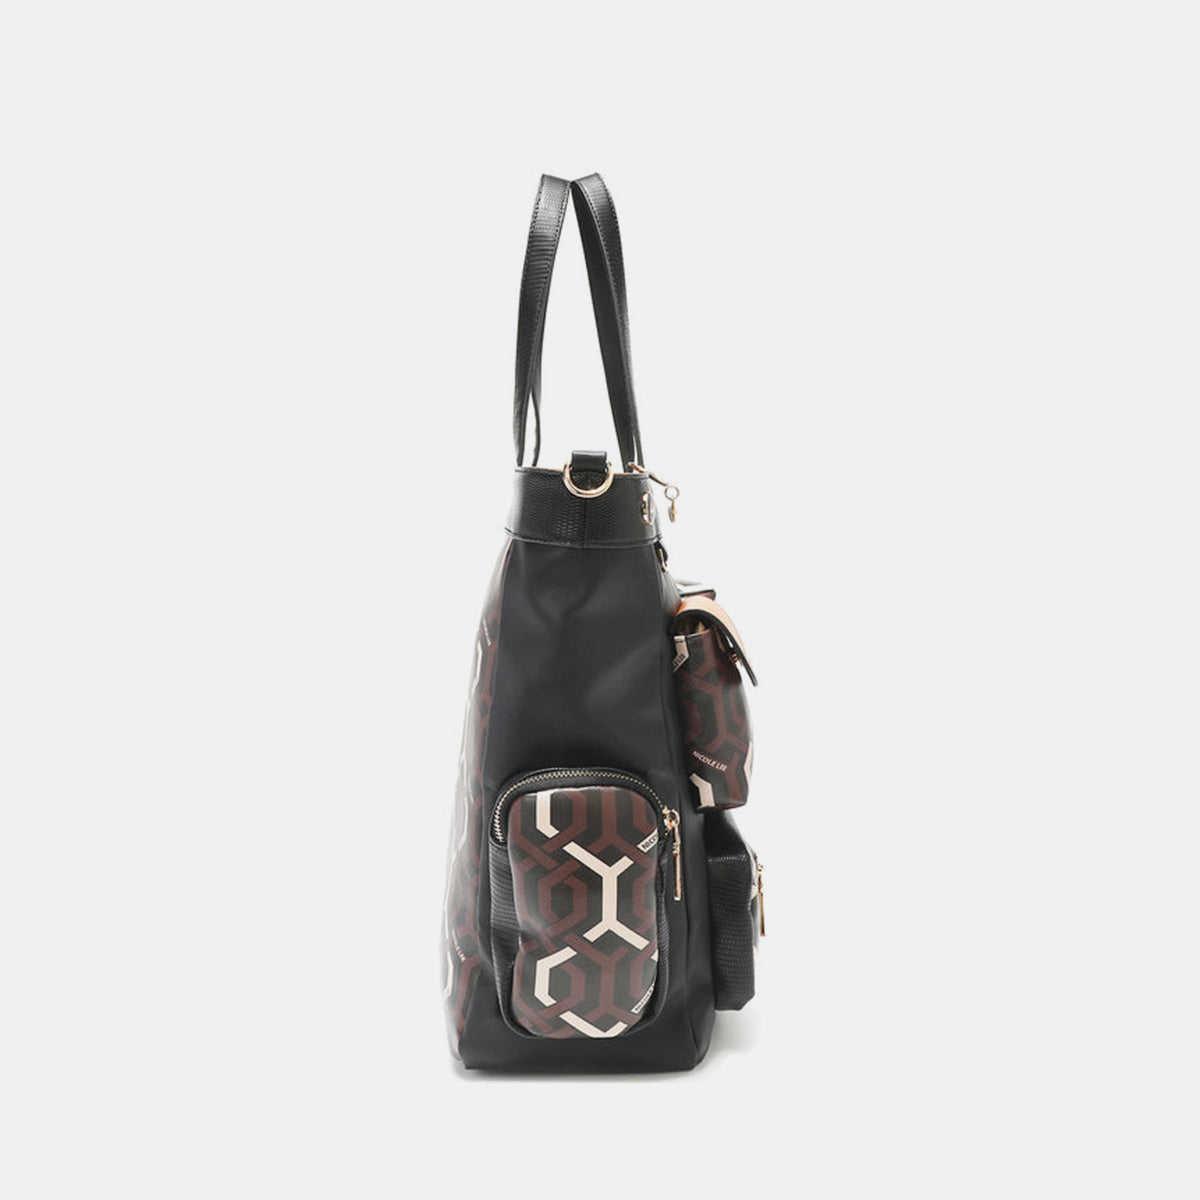 Luxurious Geometric Tote Handbag